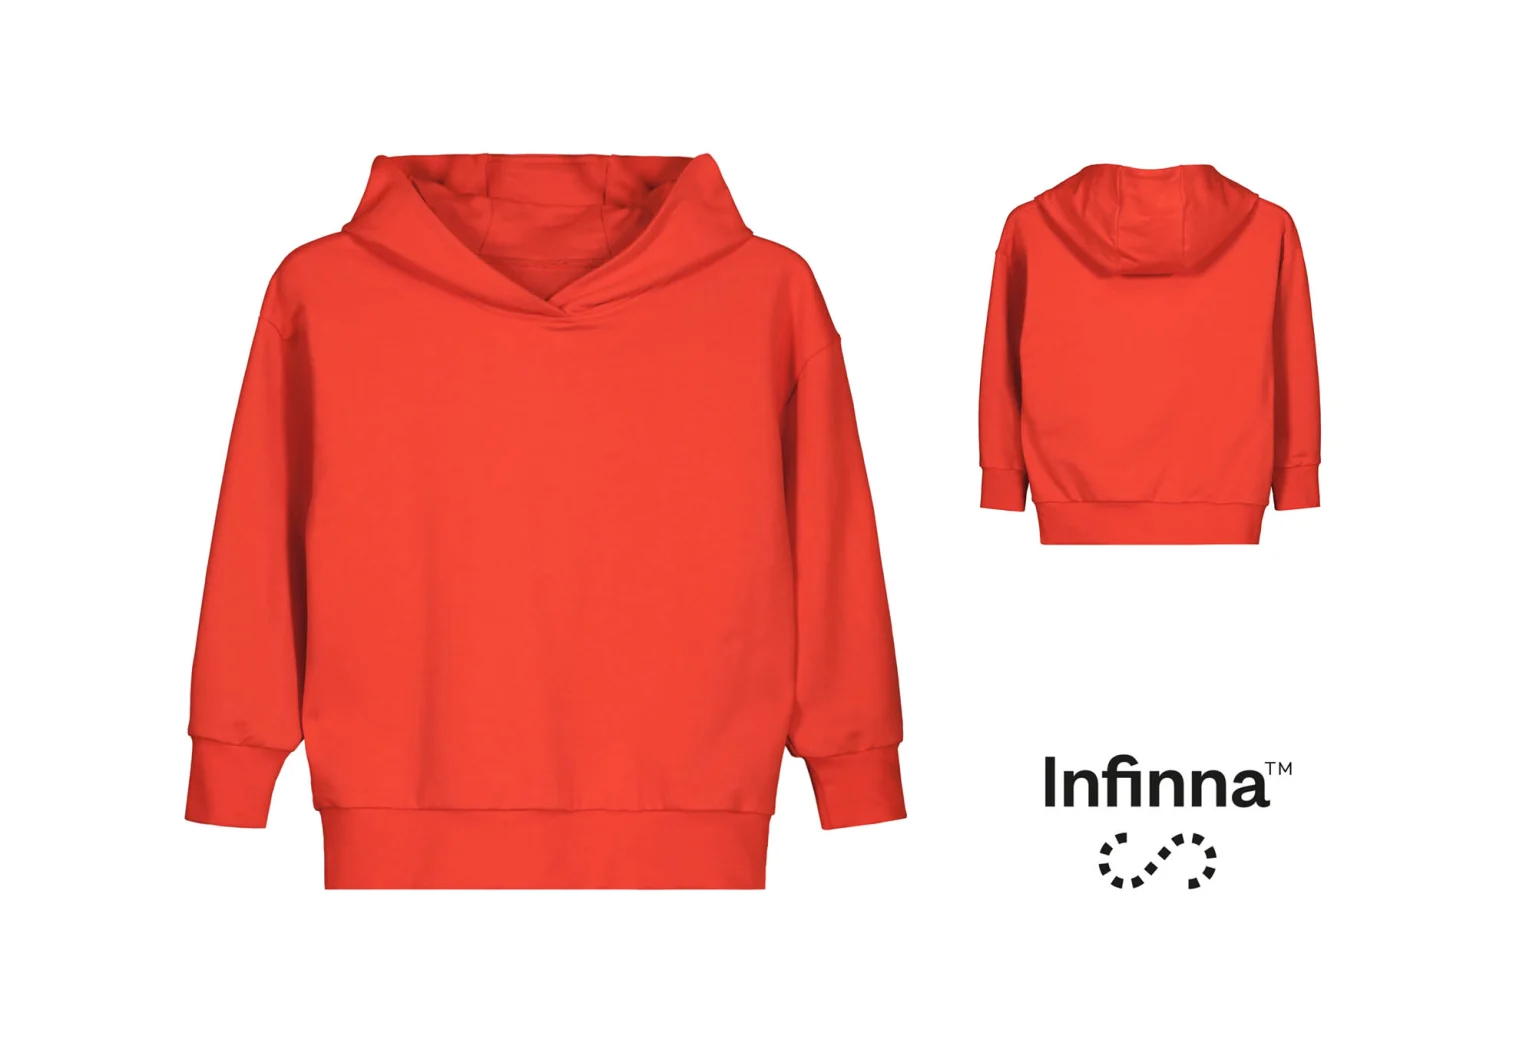 Reima InfinnaTM hoodie "Uudesti" pack shot